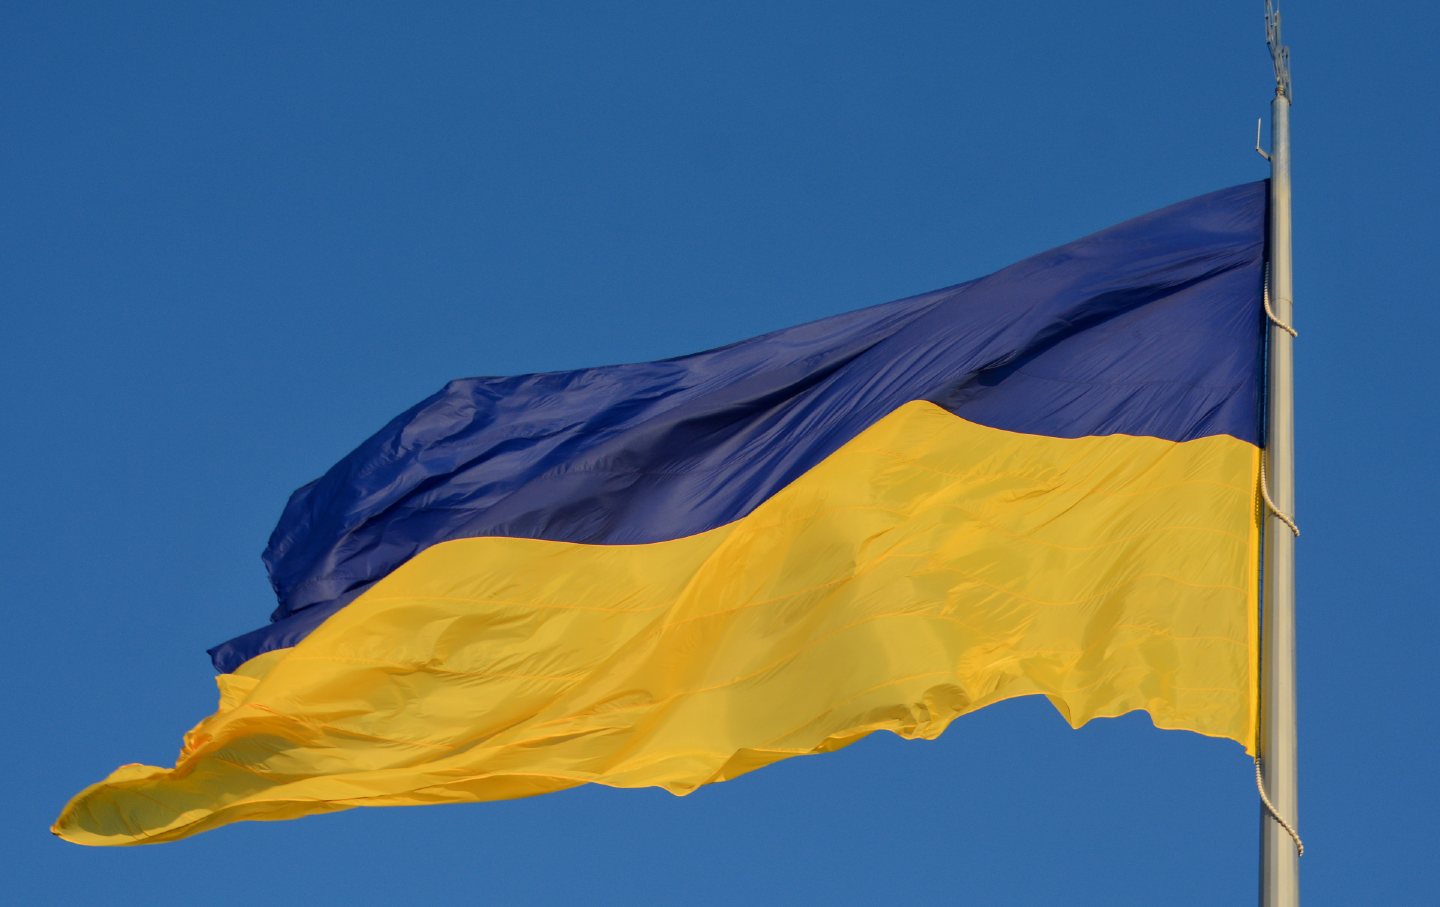 Ukraine's biggest flag flies some 90 meters above Kyiv